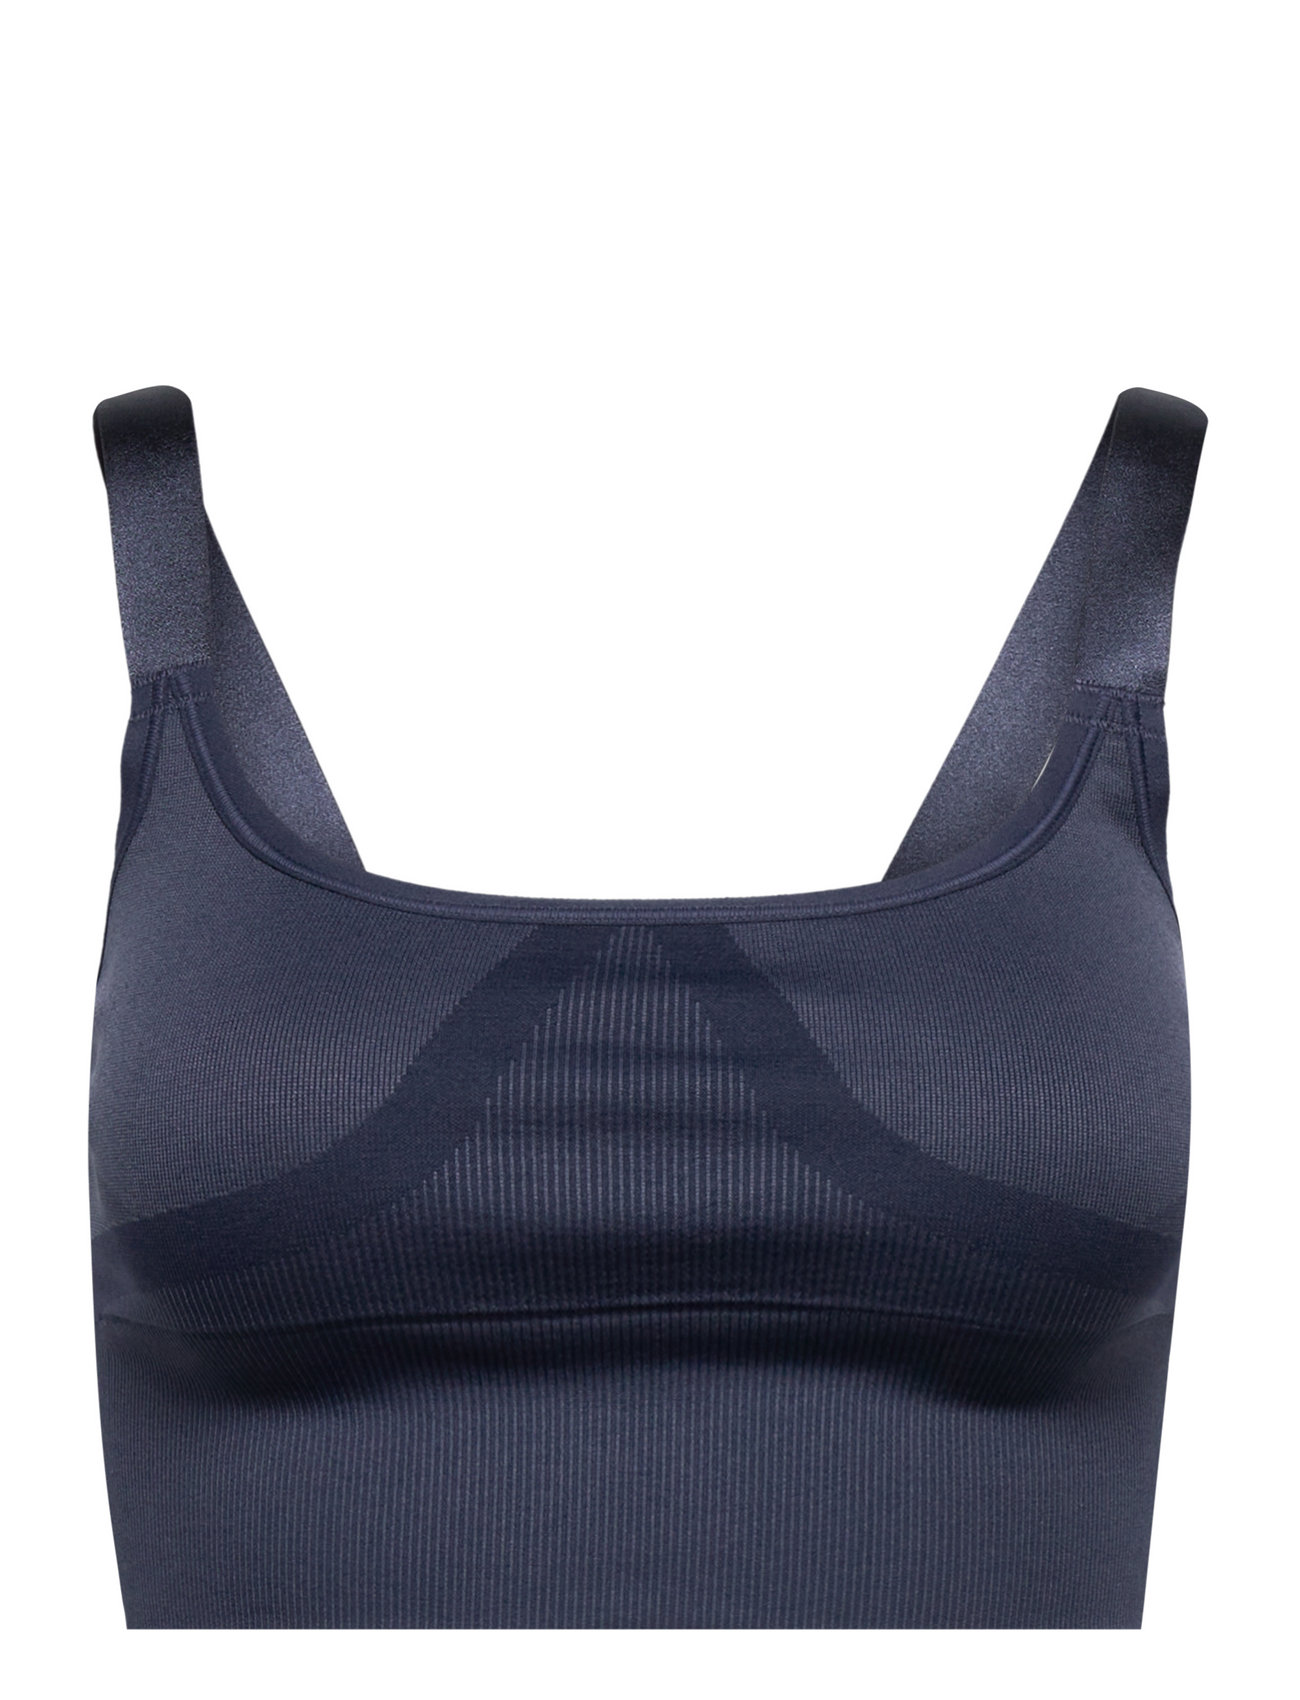 PUMA Formknit Seamless Fashion Bra – bras – shop at Booztlet